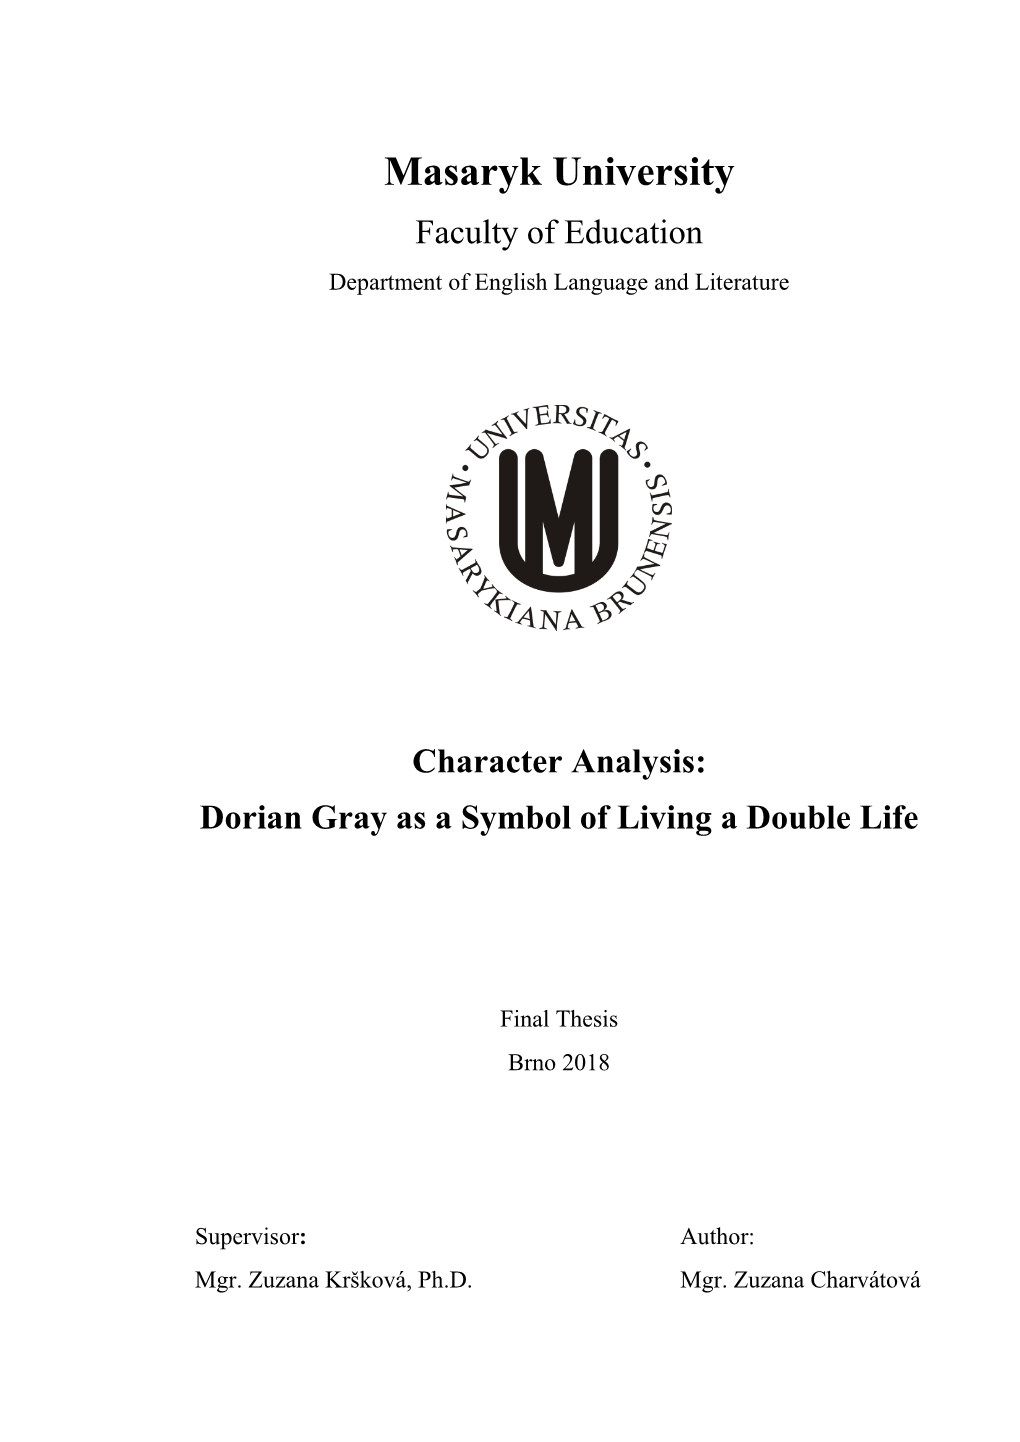 Dorian Gray As a Symbol of Living a Double Life